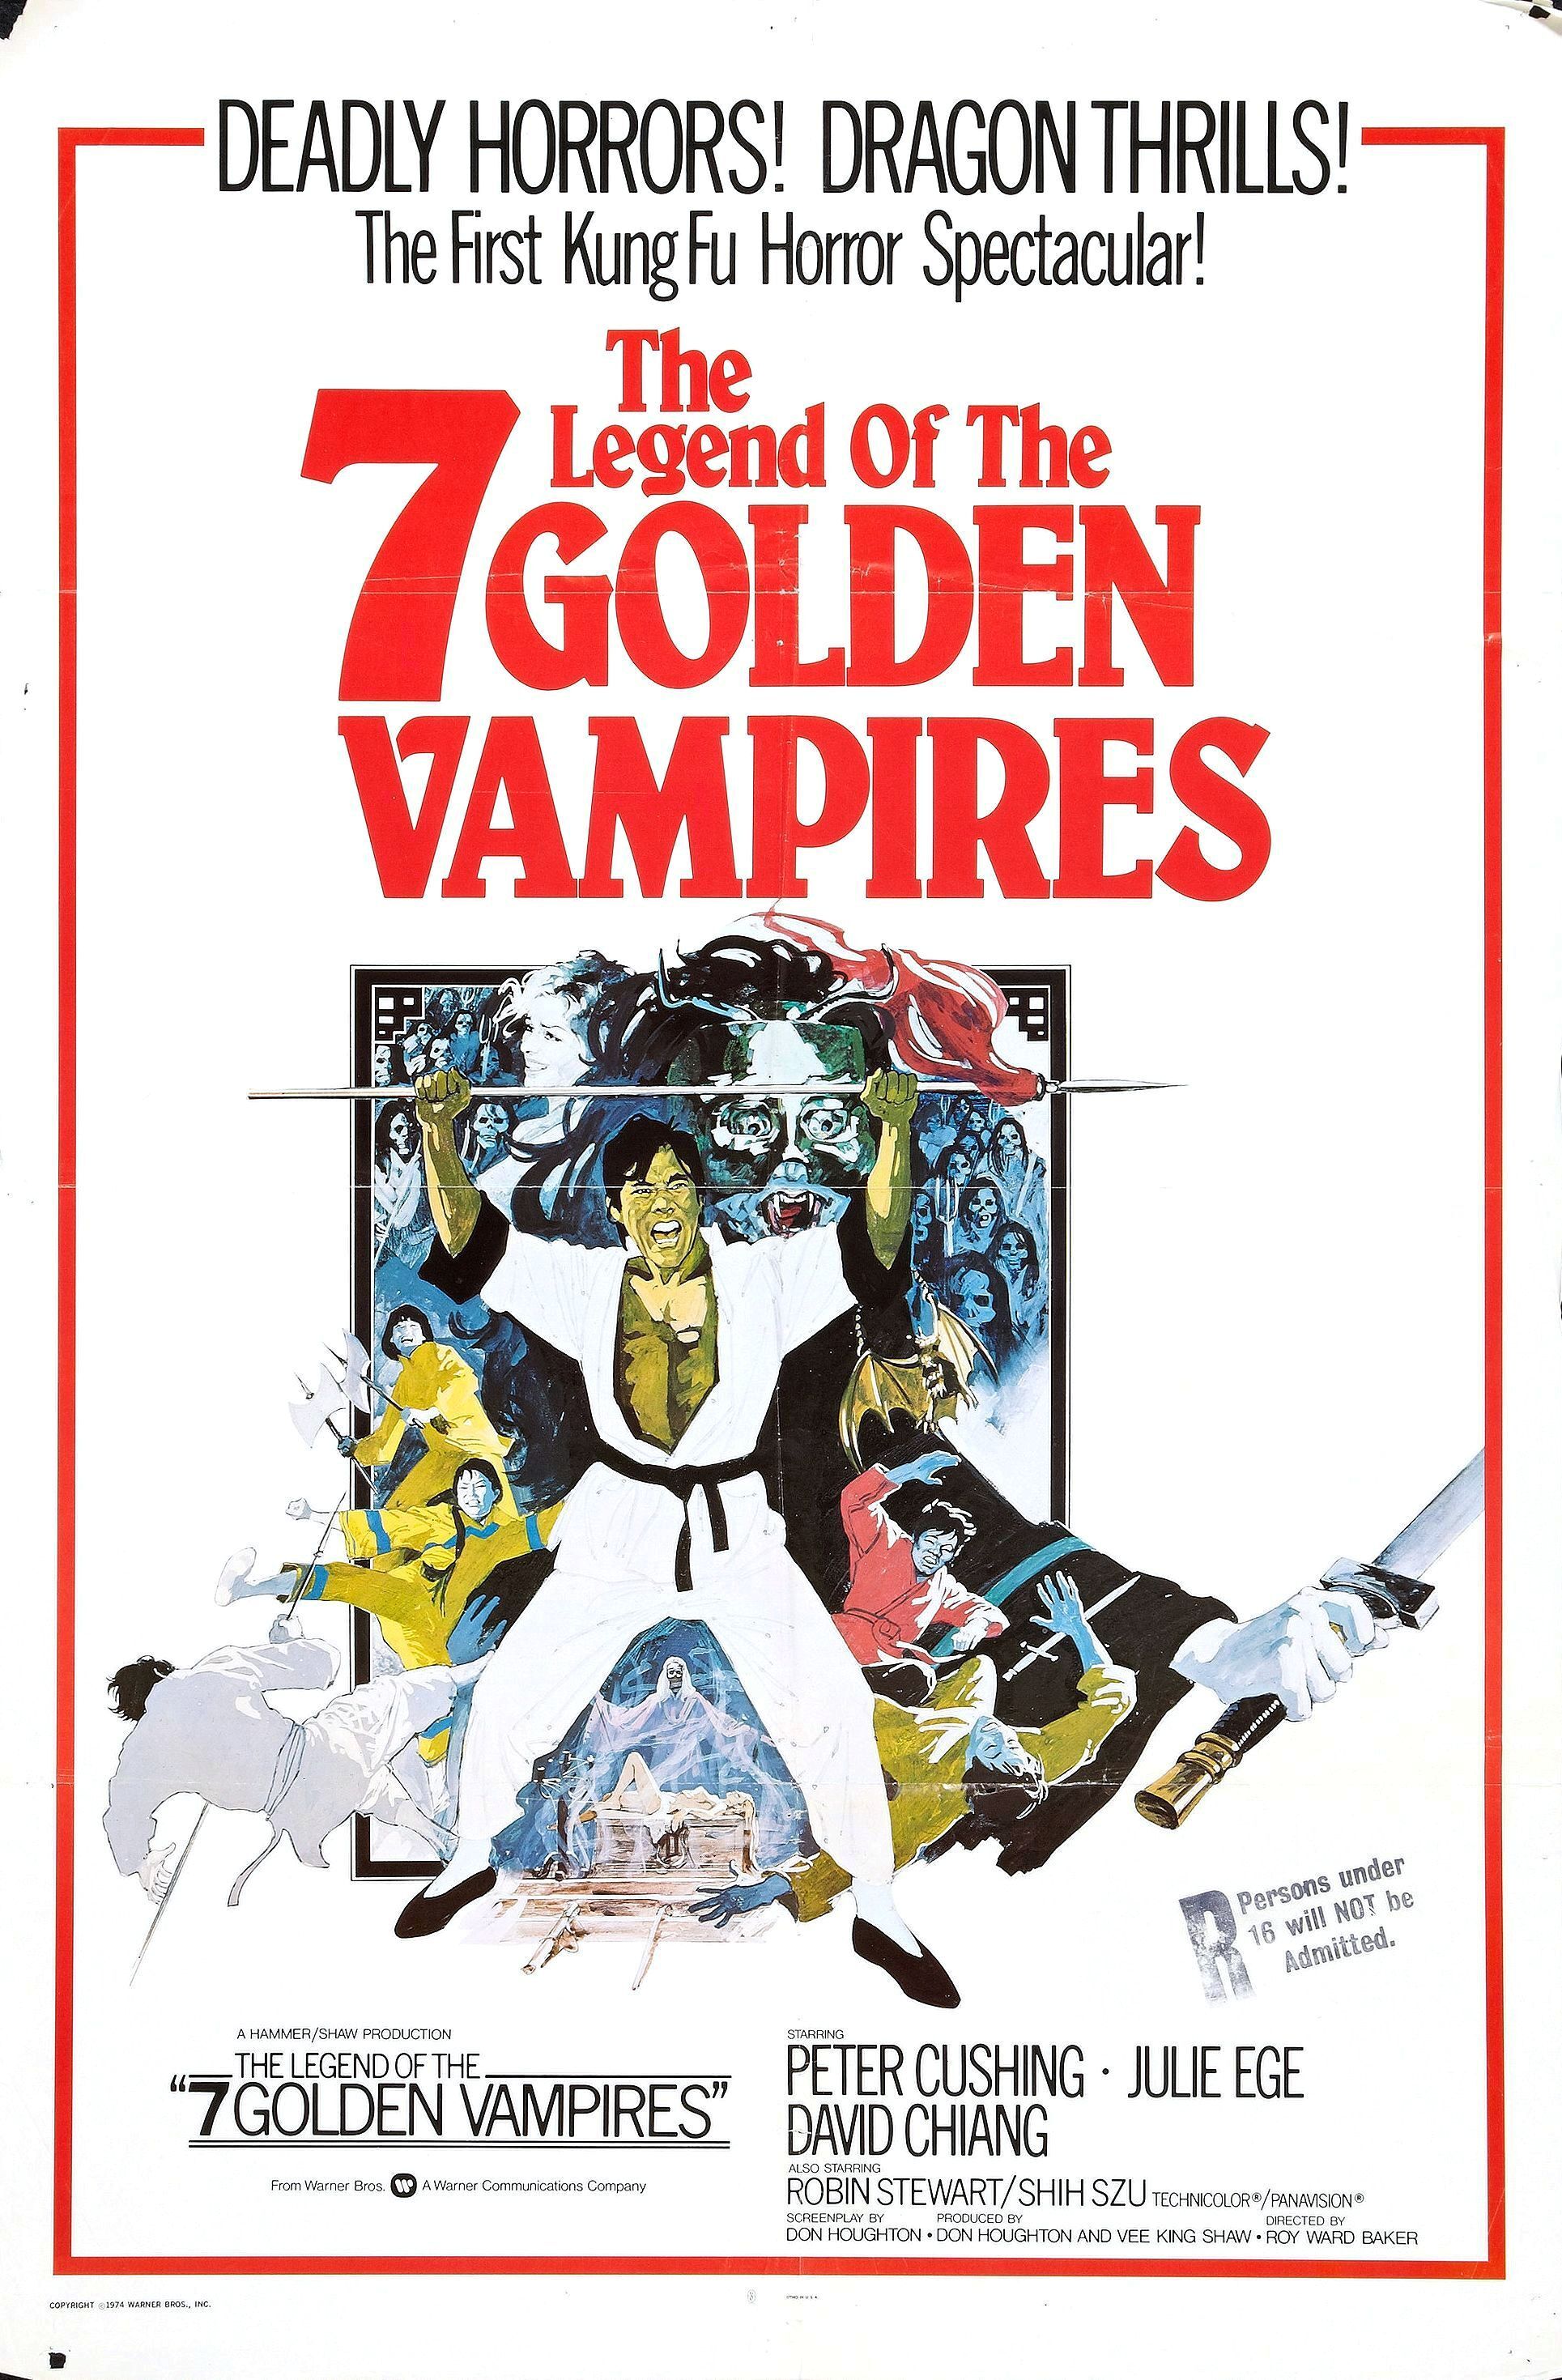 The Legend of the 7 Golden Vampires - Wikipedia